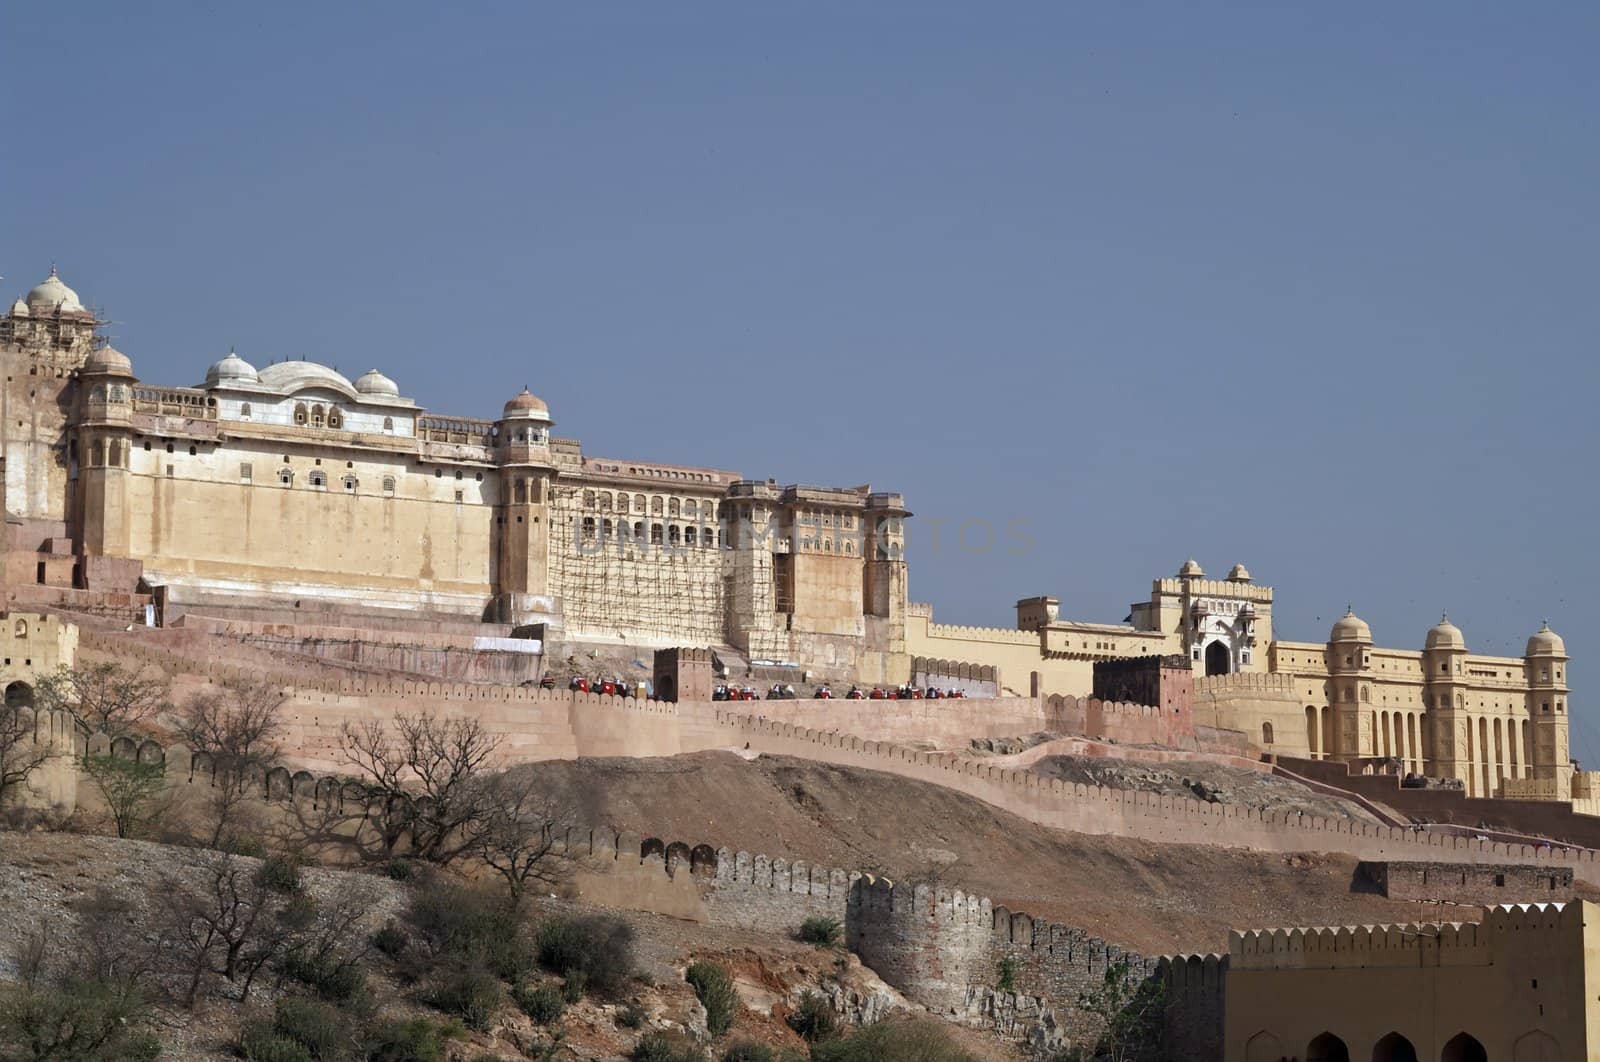 Massive walls and ramparts of Amber Fort near Jaipur, Rajasthan, India